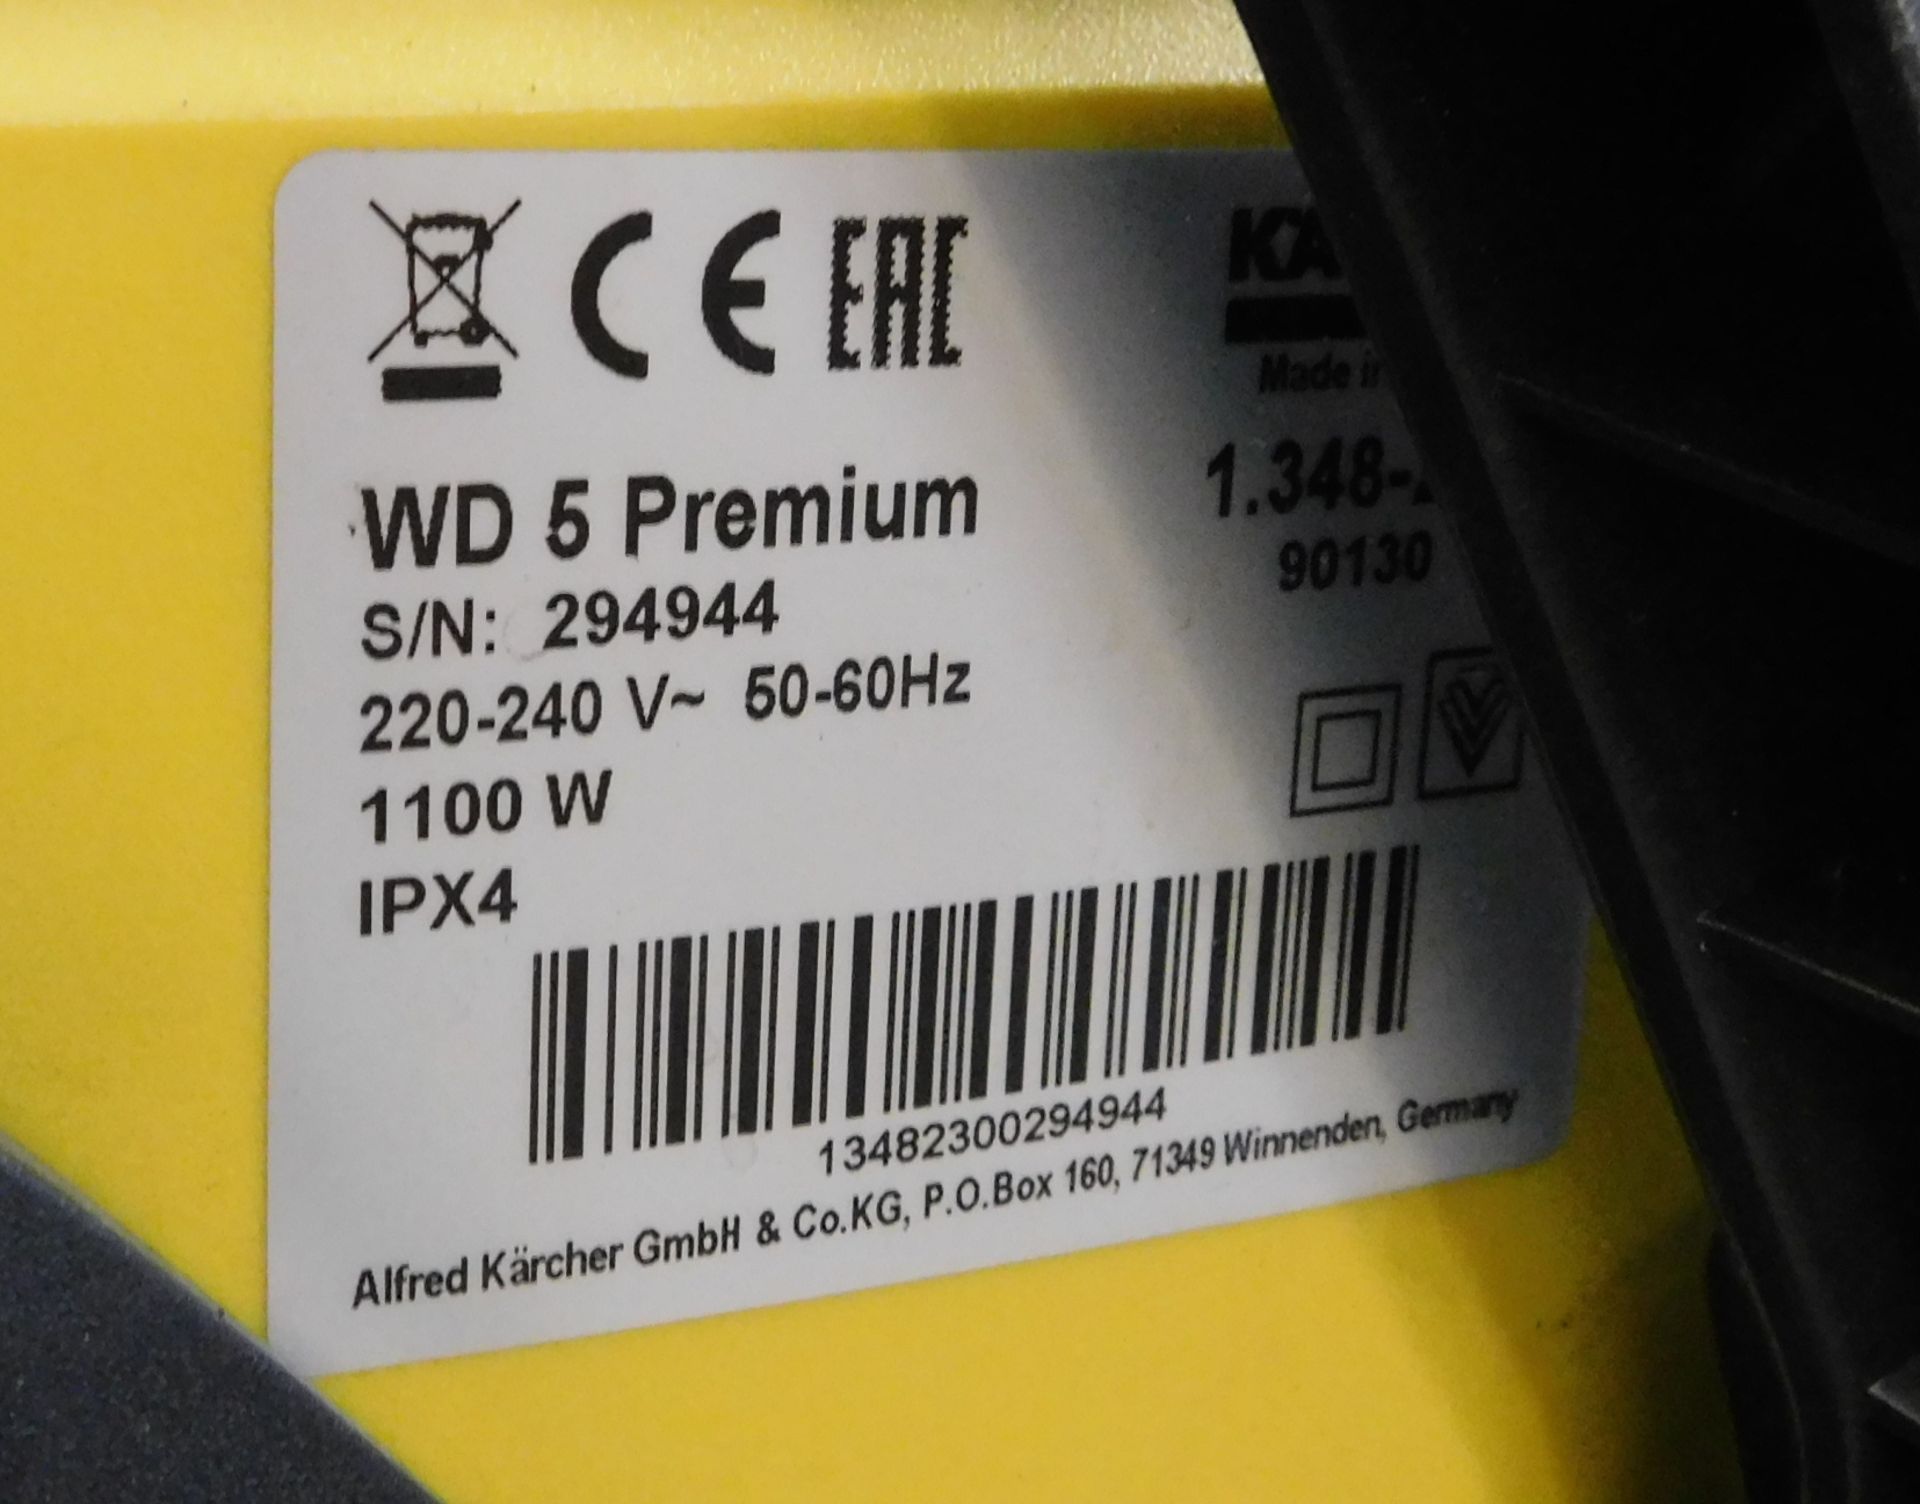 Karcher WD5 Premium Wet & Dry Vacuum, Serial Number 294944 (Location: Tonbridge, Kent. Please - Image 2 of 2